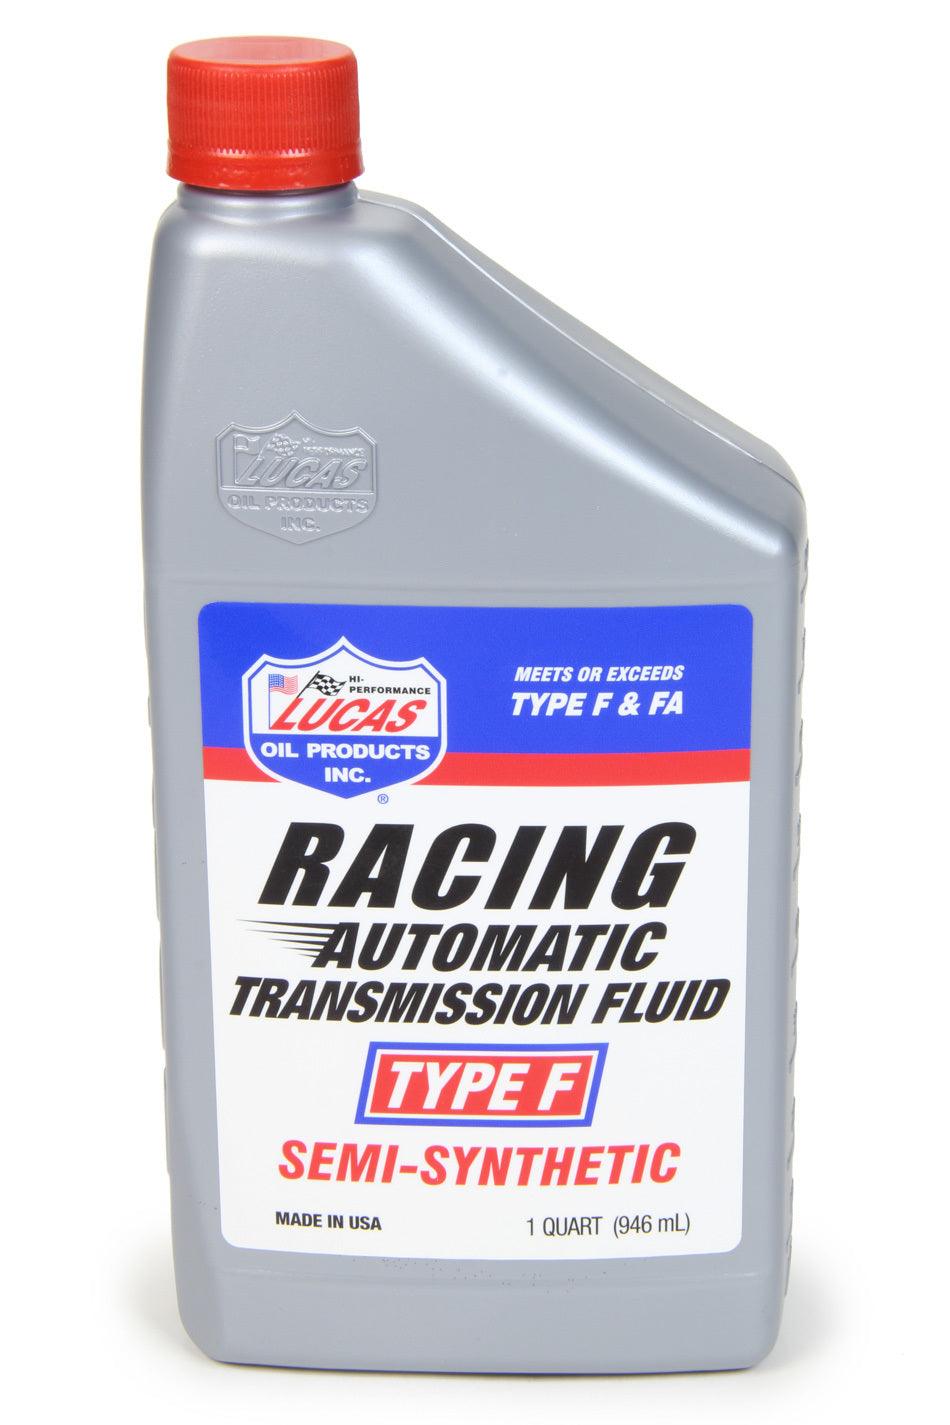 Type F Racing Transmissi on Fluid 1 Quart - Burlile Performance Products